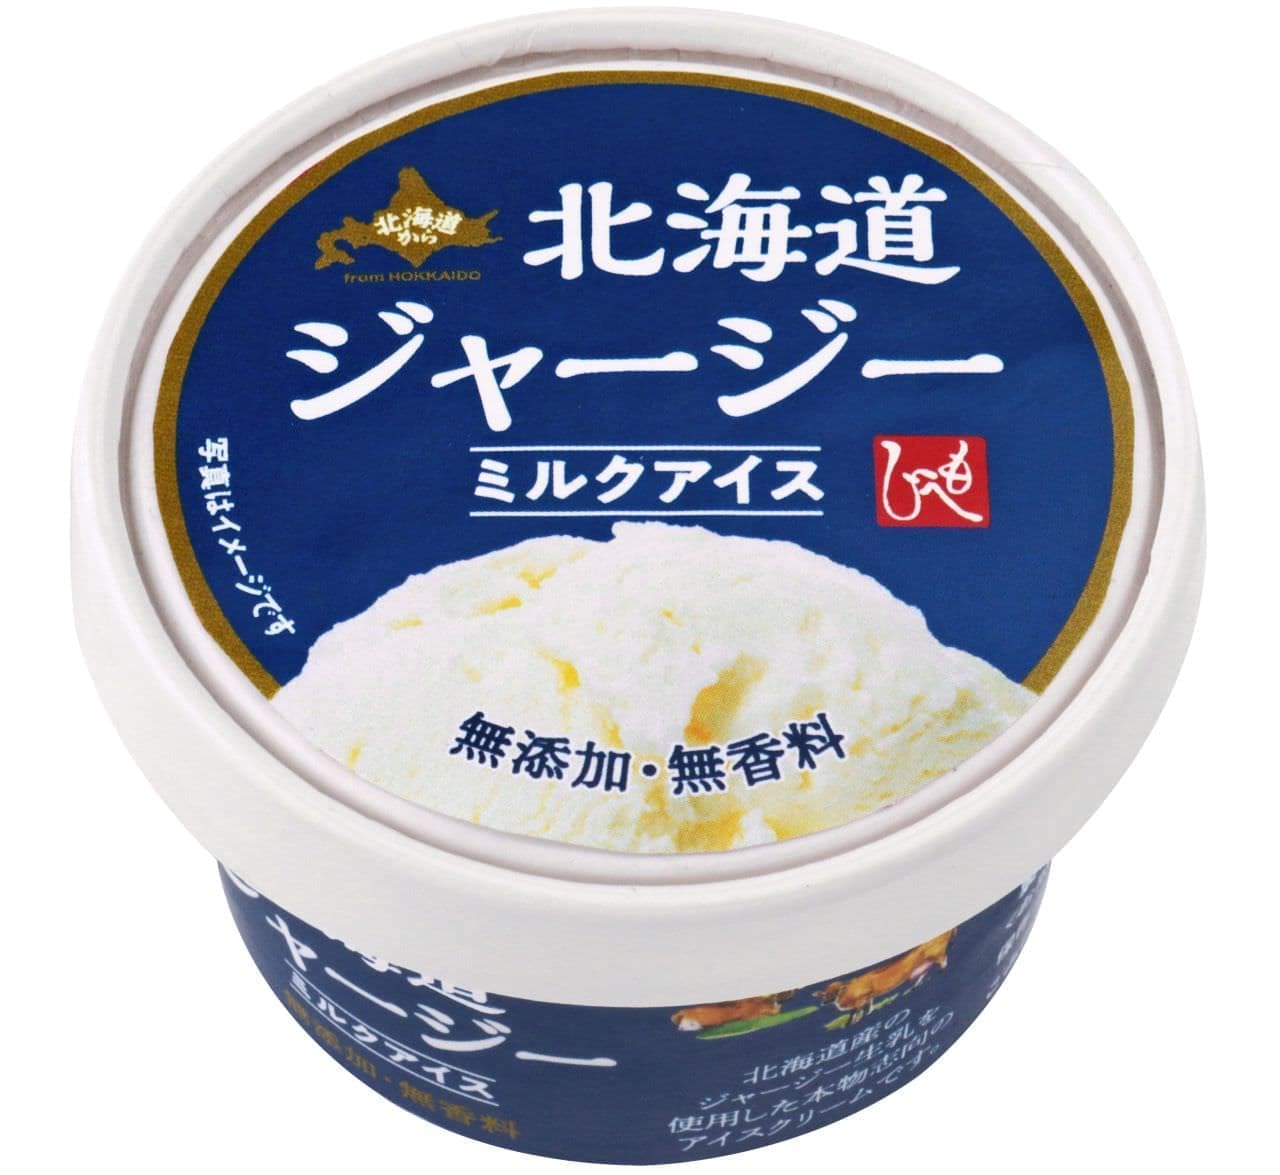 KALDI "From Moheji Hokkaido to Hokkaido Jersey Milk Ice"